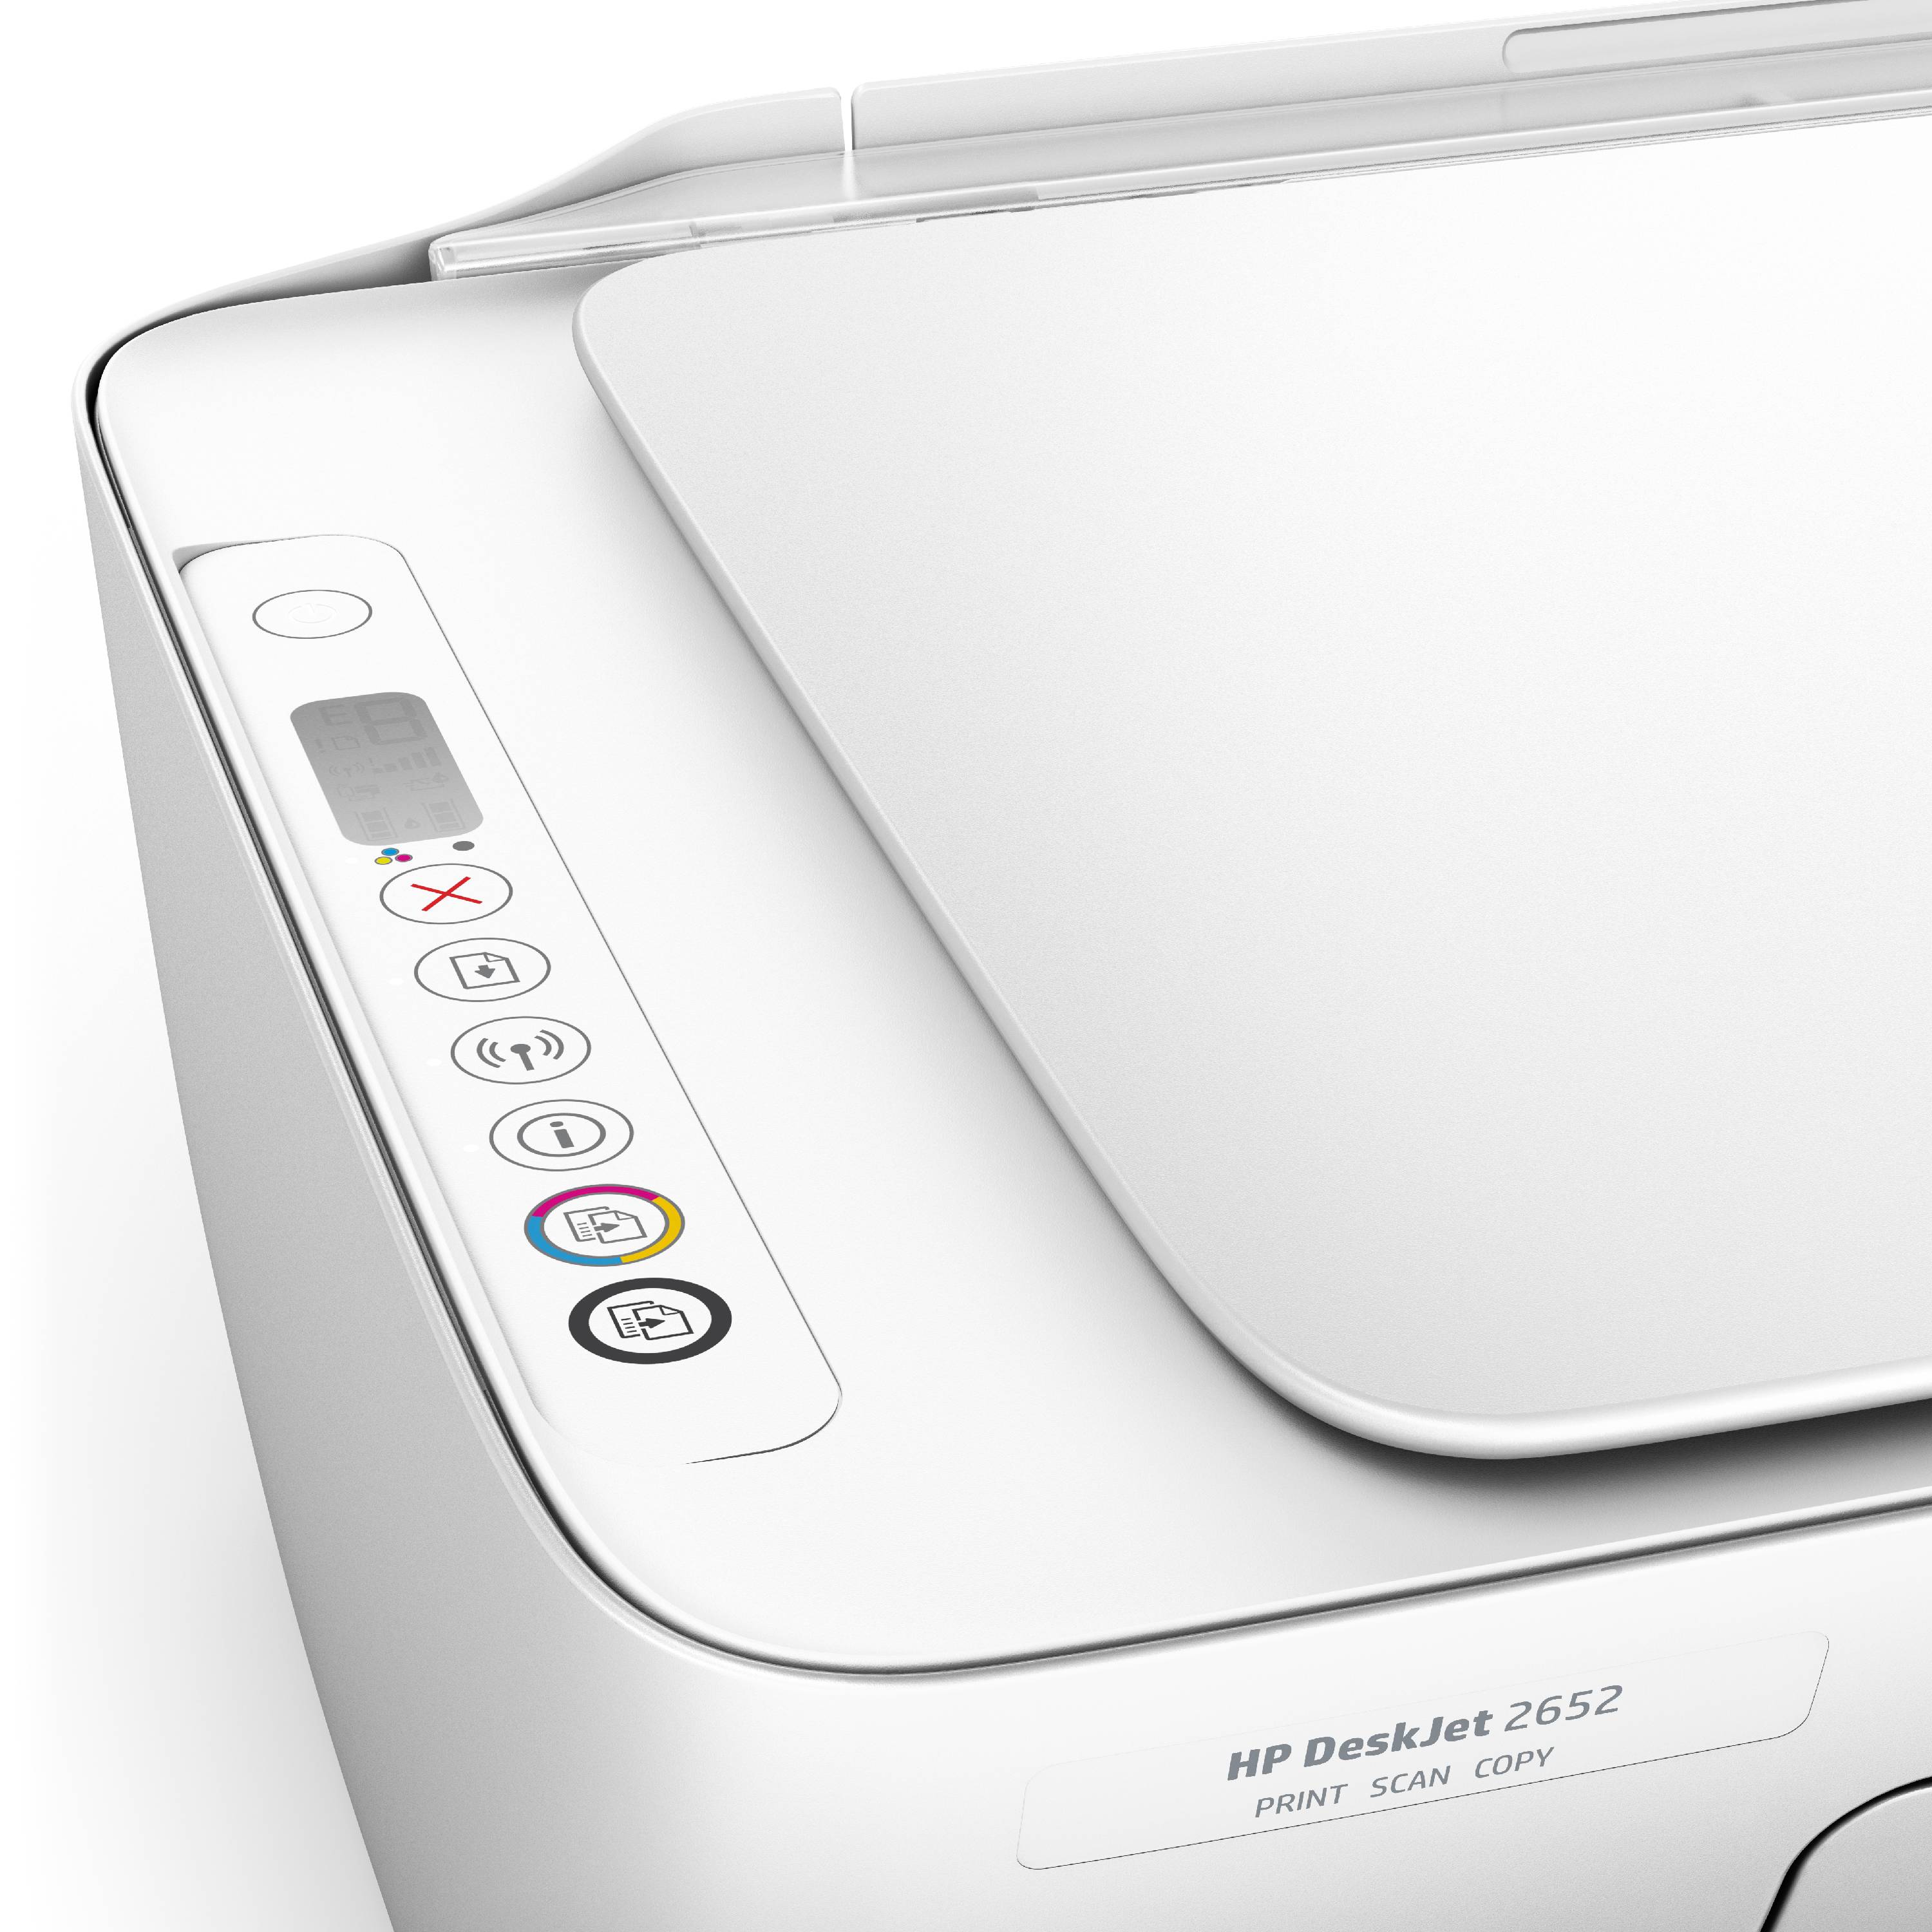 HP DeskJet 2652 All-in-One Wireless Color Inkjet Printer - Instant Ink Ready, White - image 5 of 20